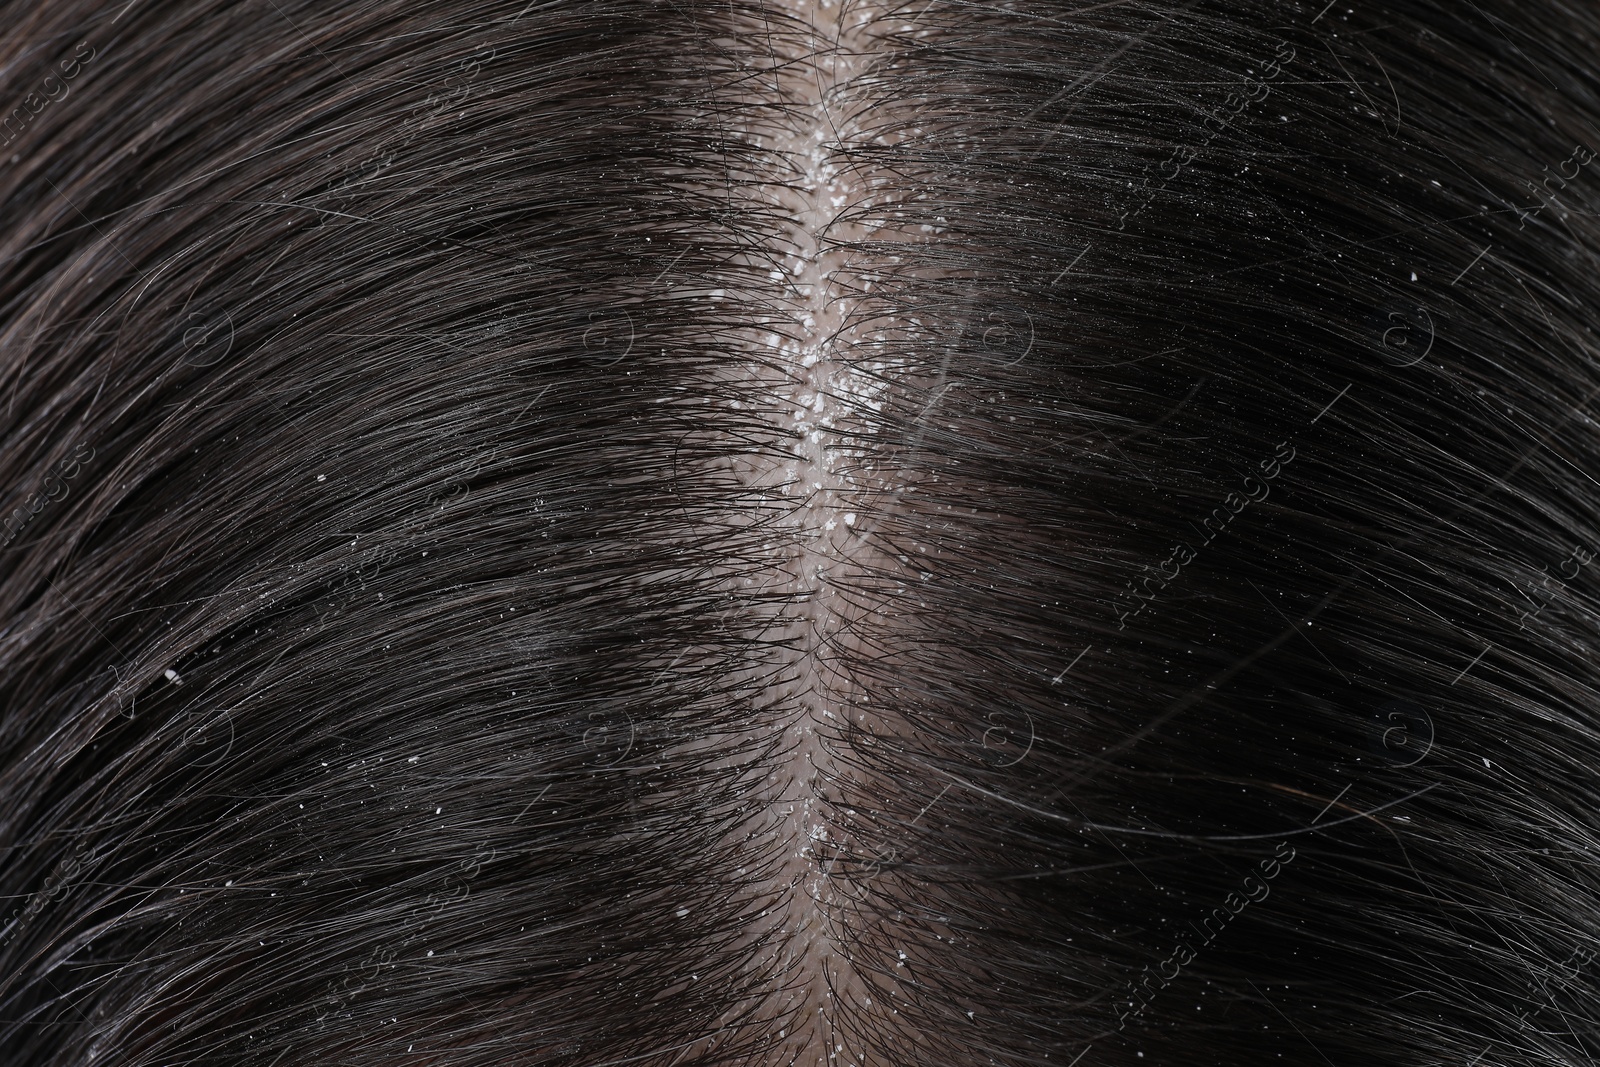 Photo of Closeup view of dark woman`s hair with dandruff